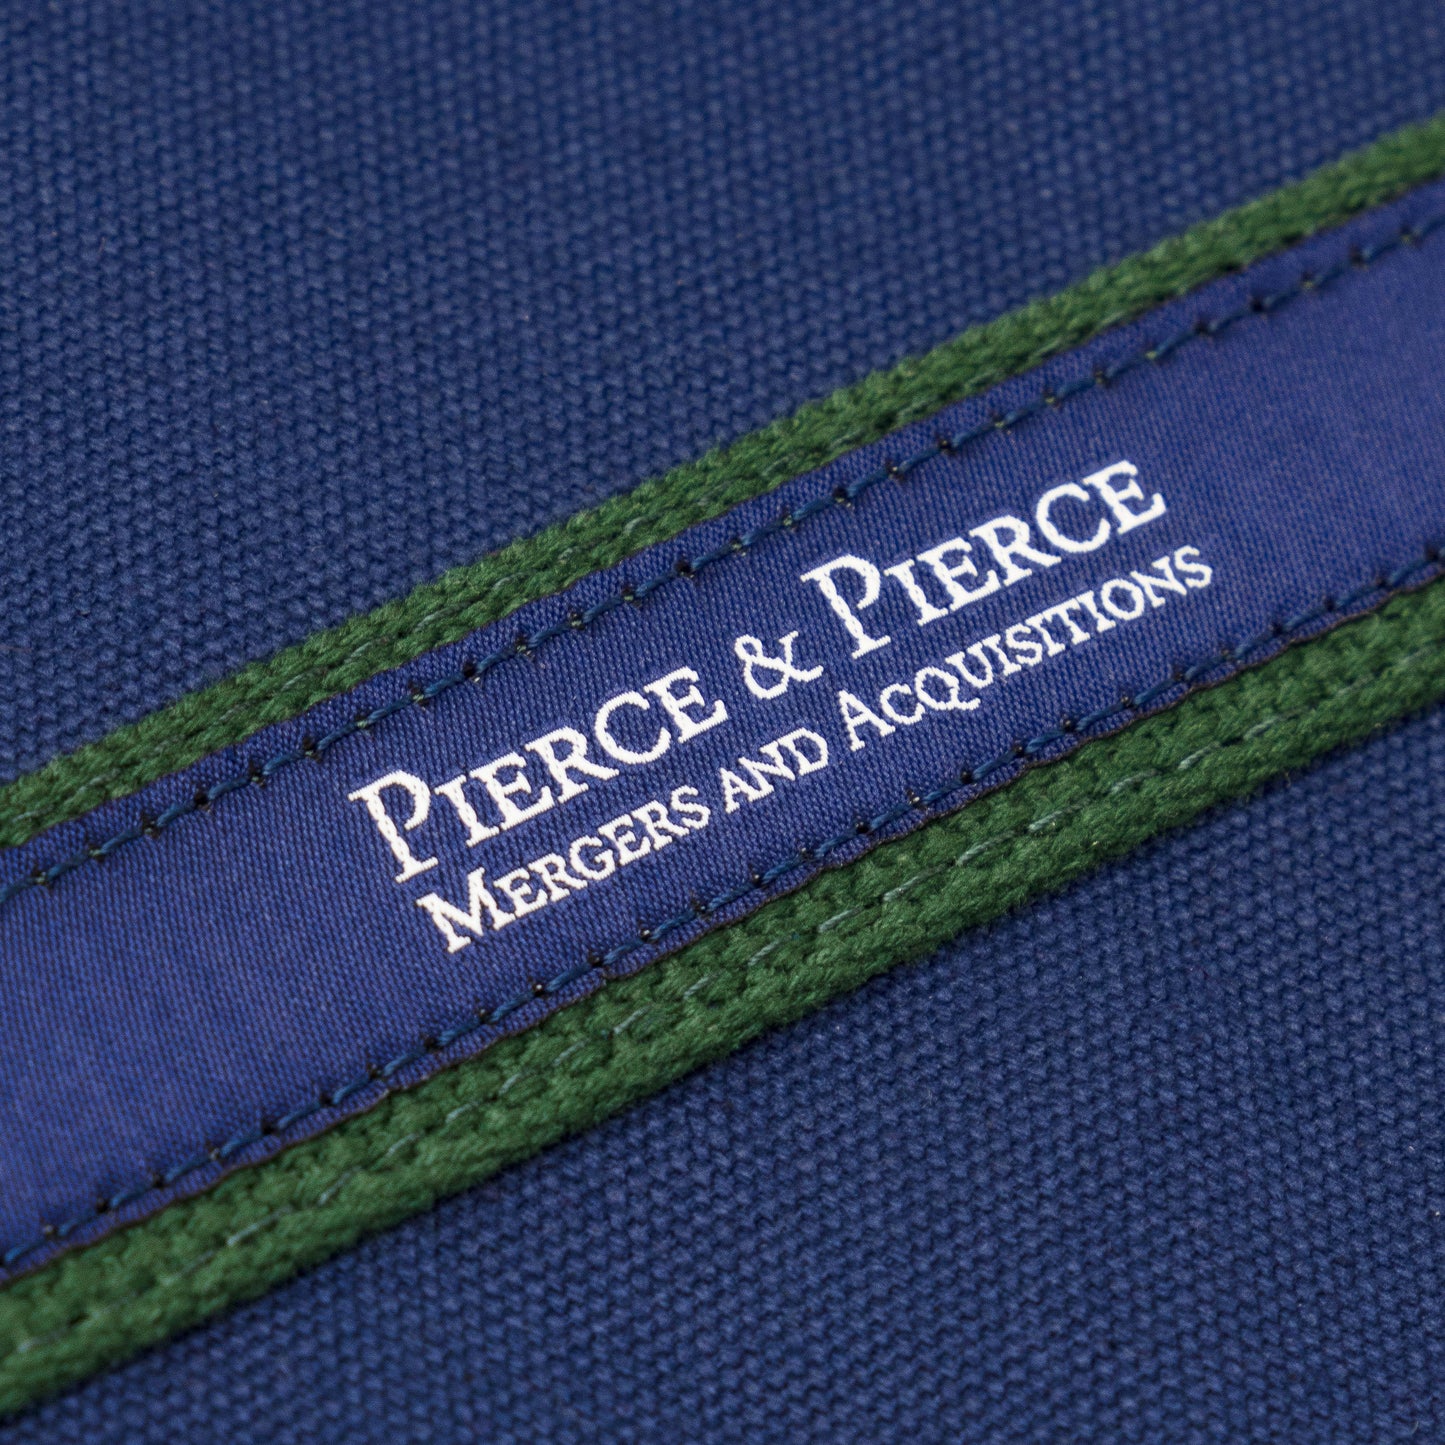 Pierce & Pierce Banker Bag